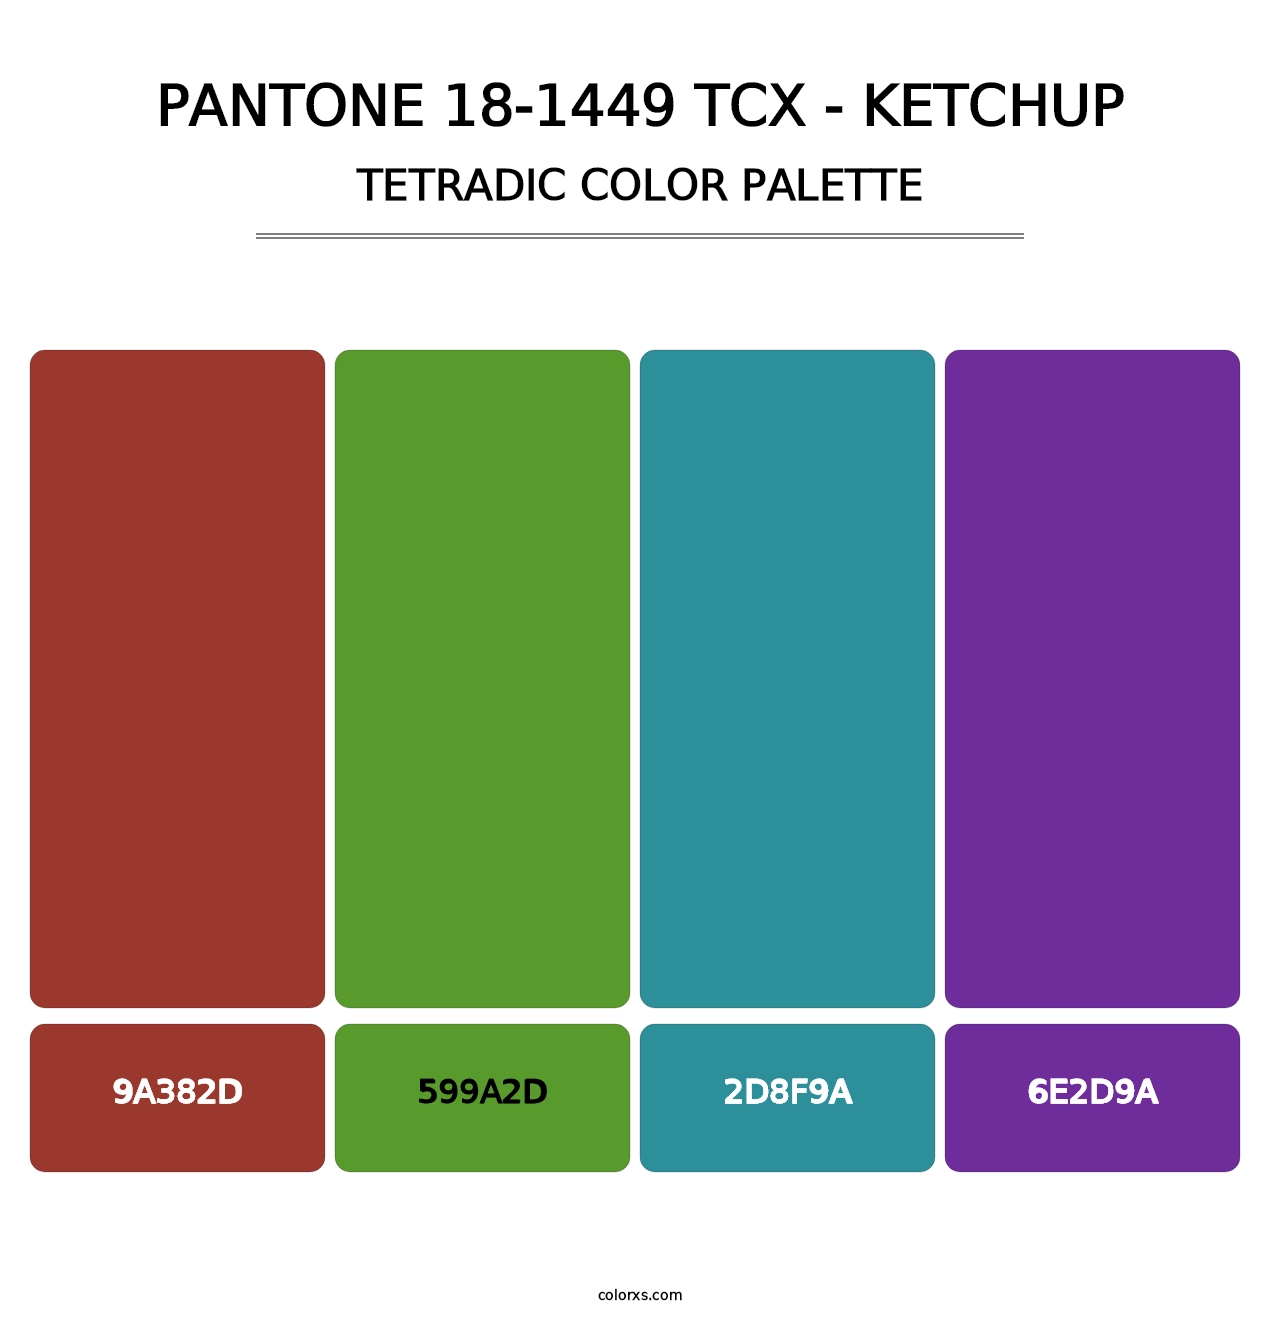 PANTONE 18-1449 TCX - Ketchup - Tetradic Color Palette